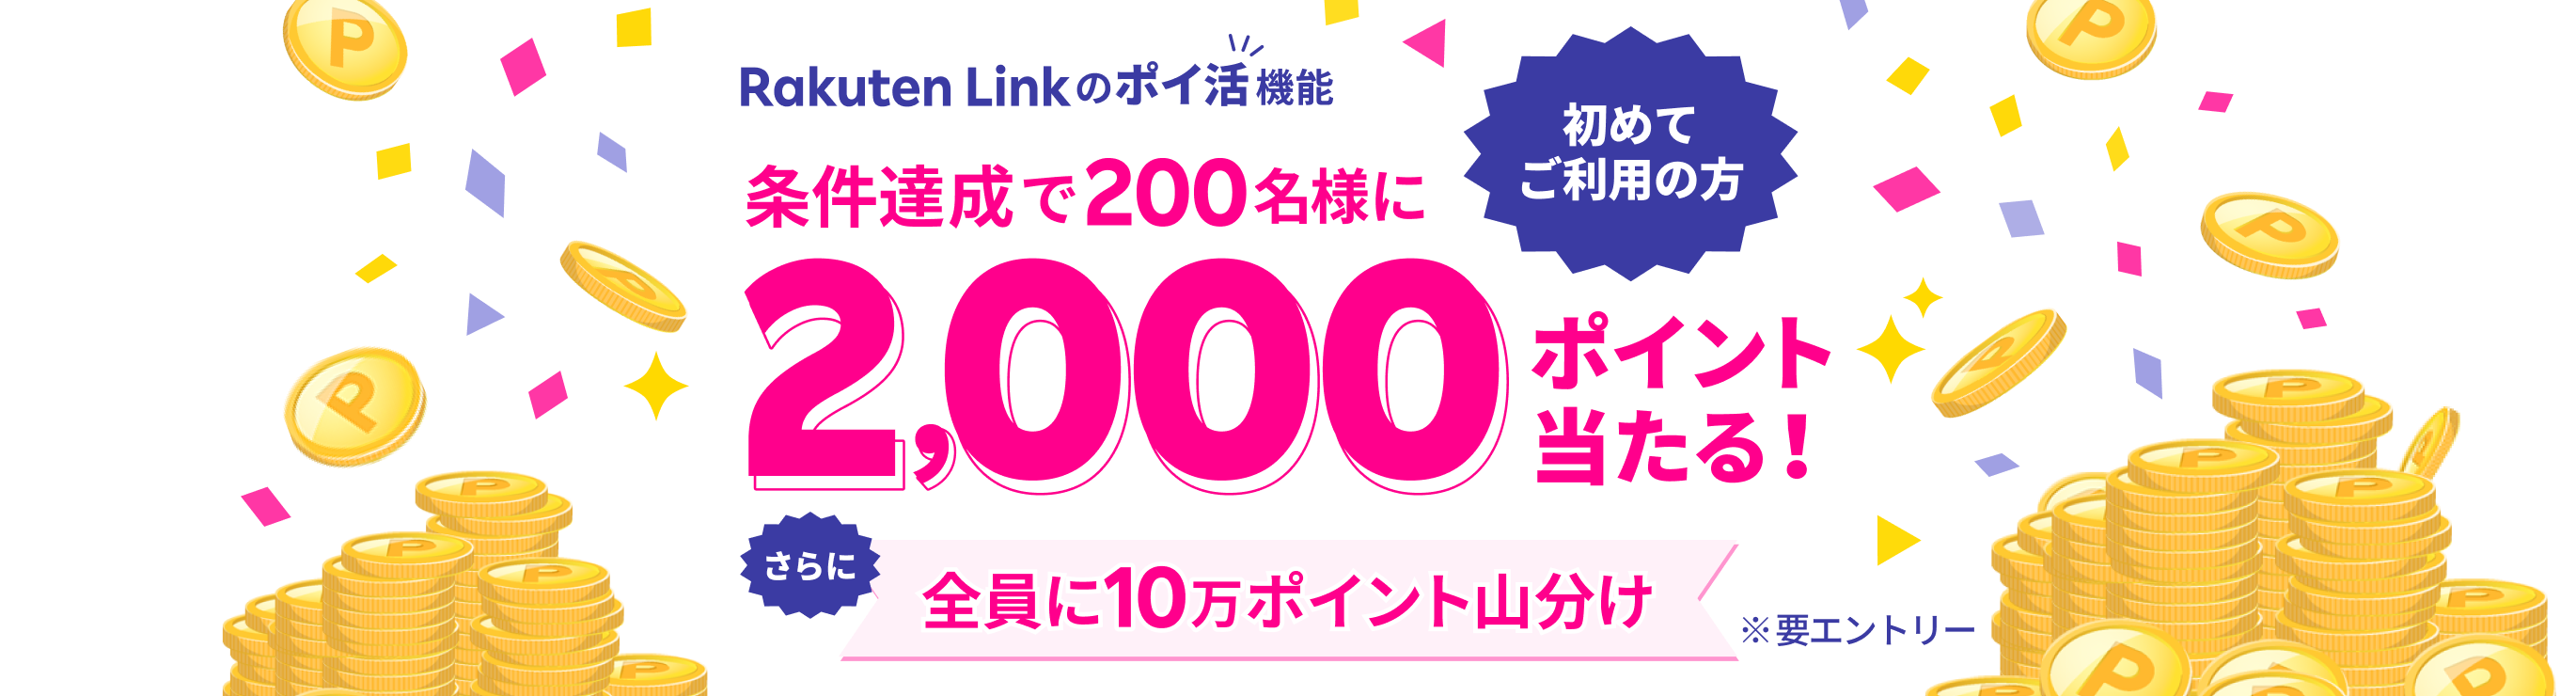 Rakuten Link のポイ活機能 初めてご利用の方 条件達成で200名様に2,000ポイント当たる！さらに全員に10万ポイント山分け ※要エントリー